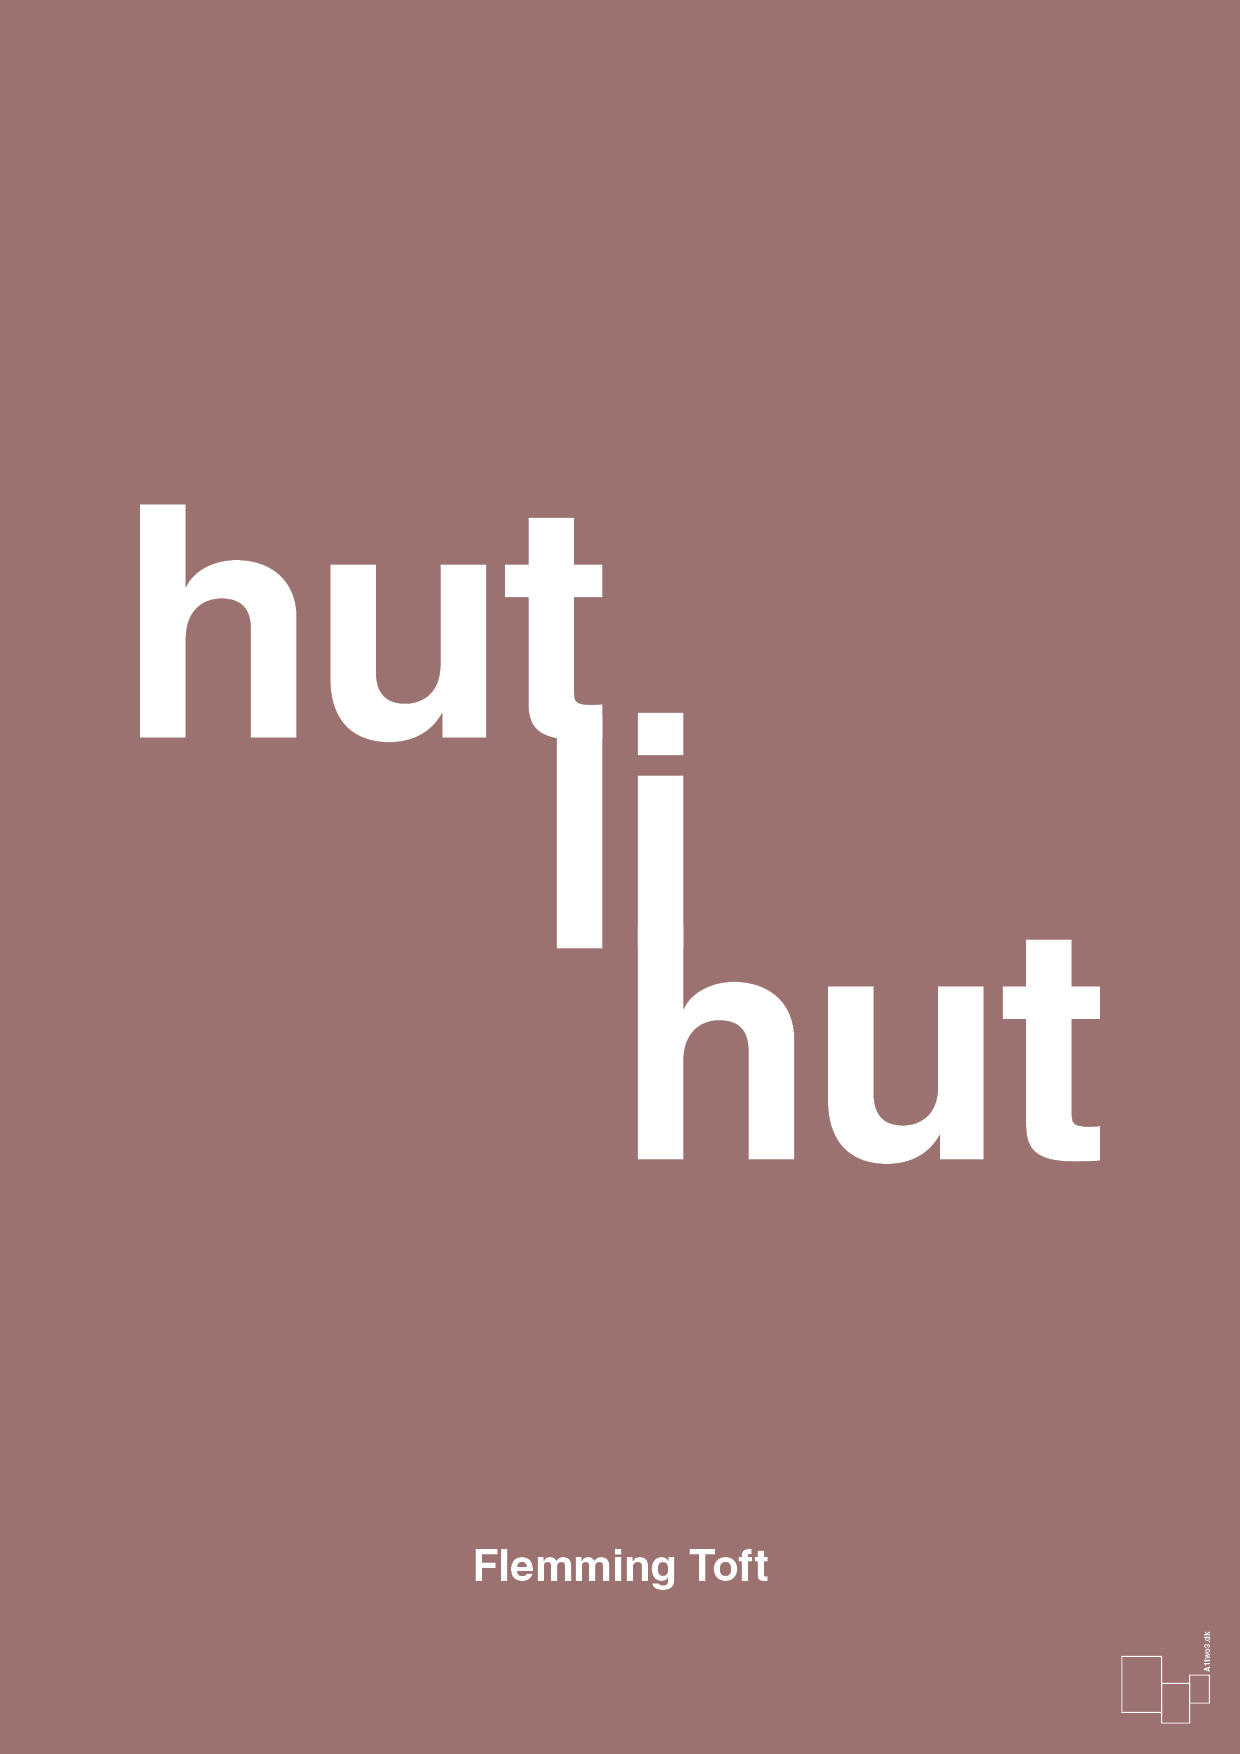 hutlihut - Plakat med Citater i Plum